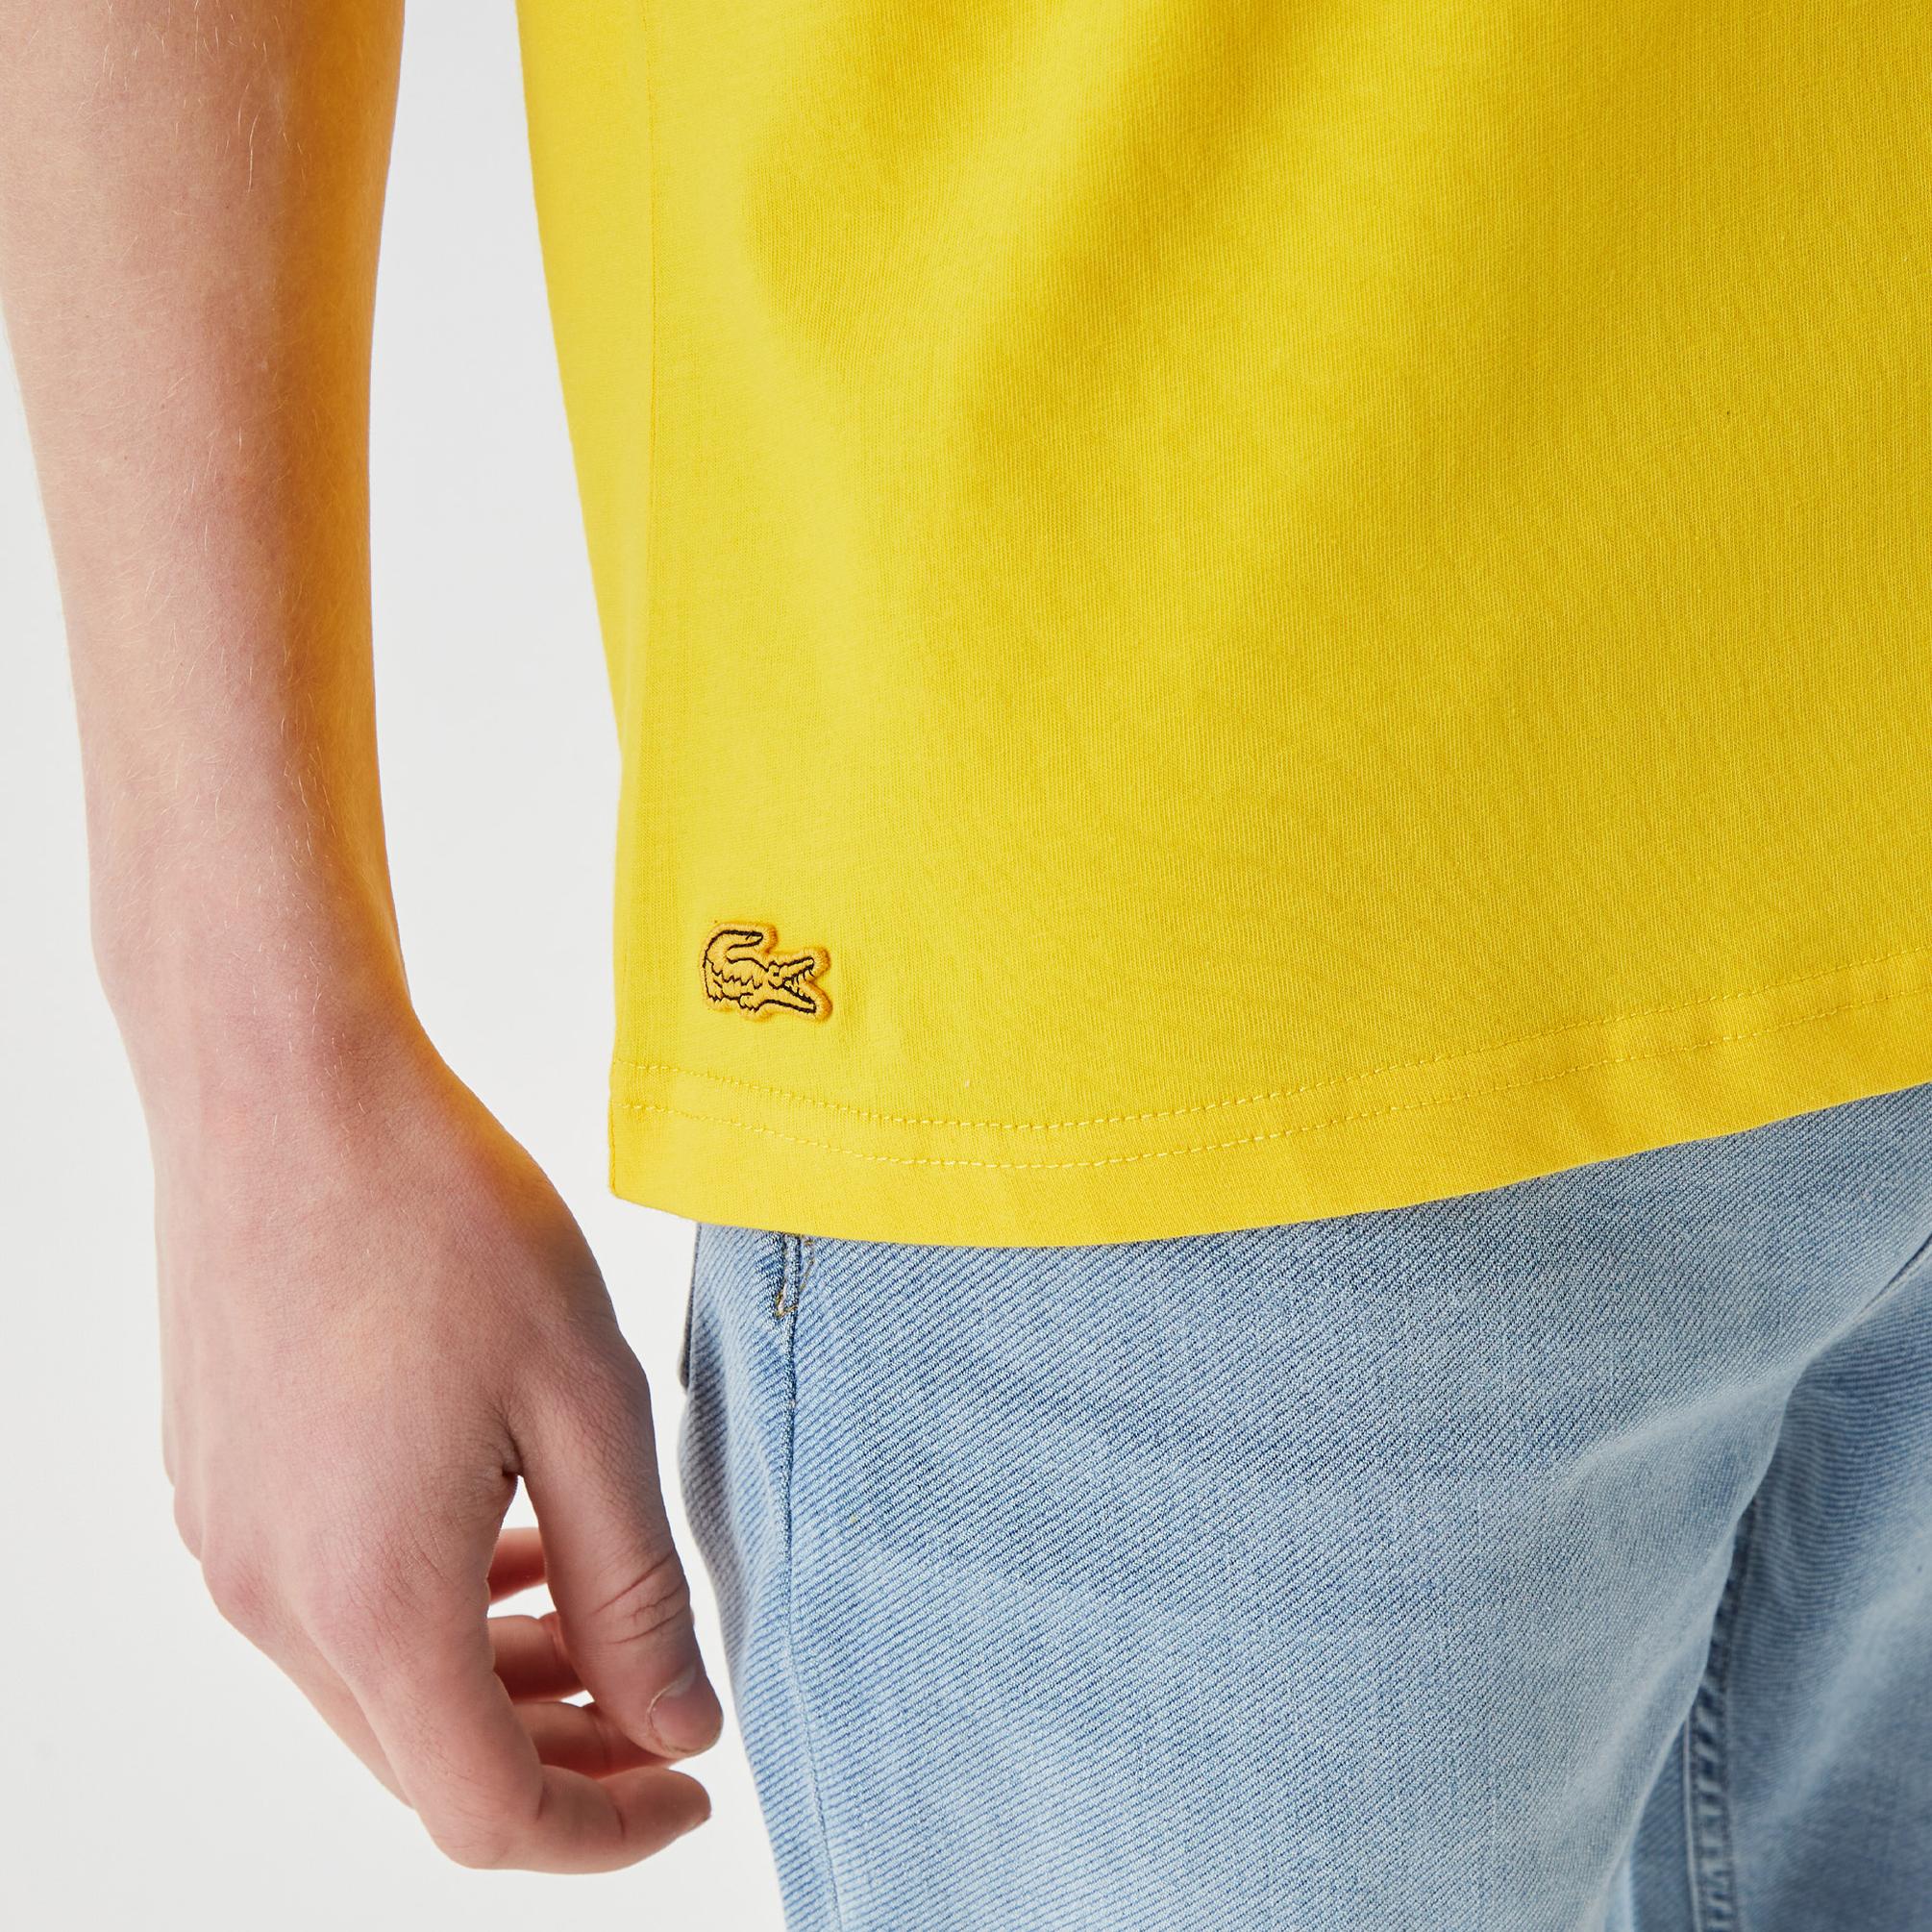  Lacoste Core Erkek Sarı T-Shirt